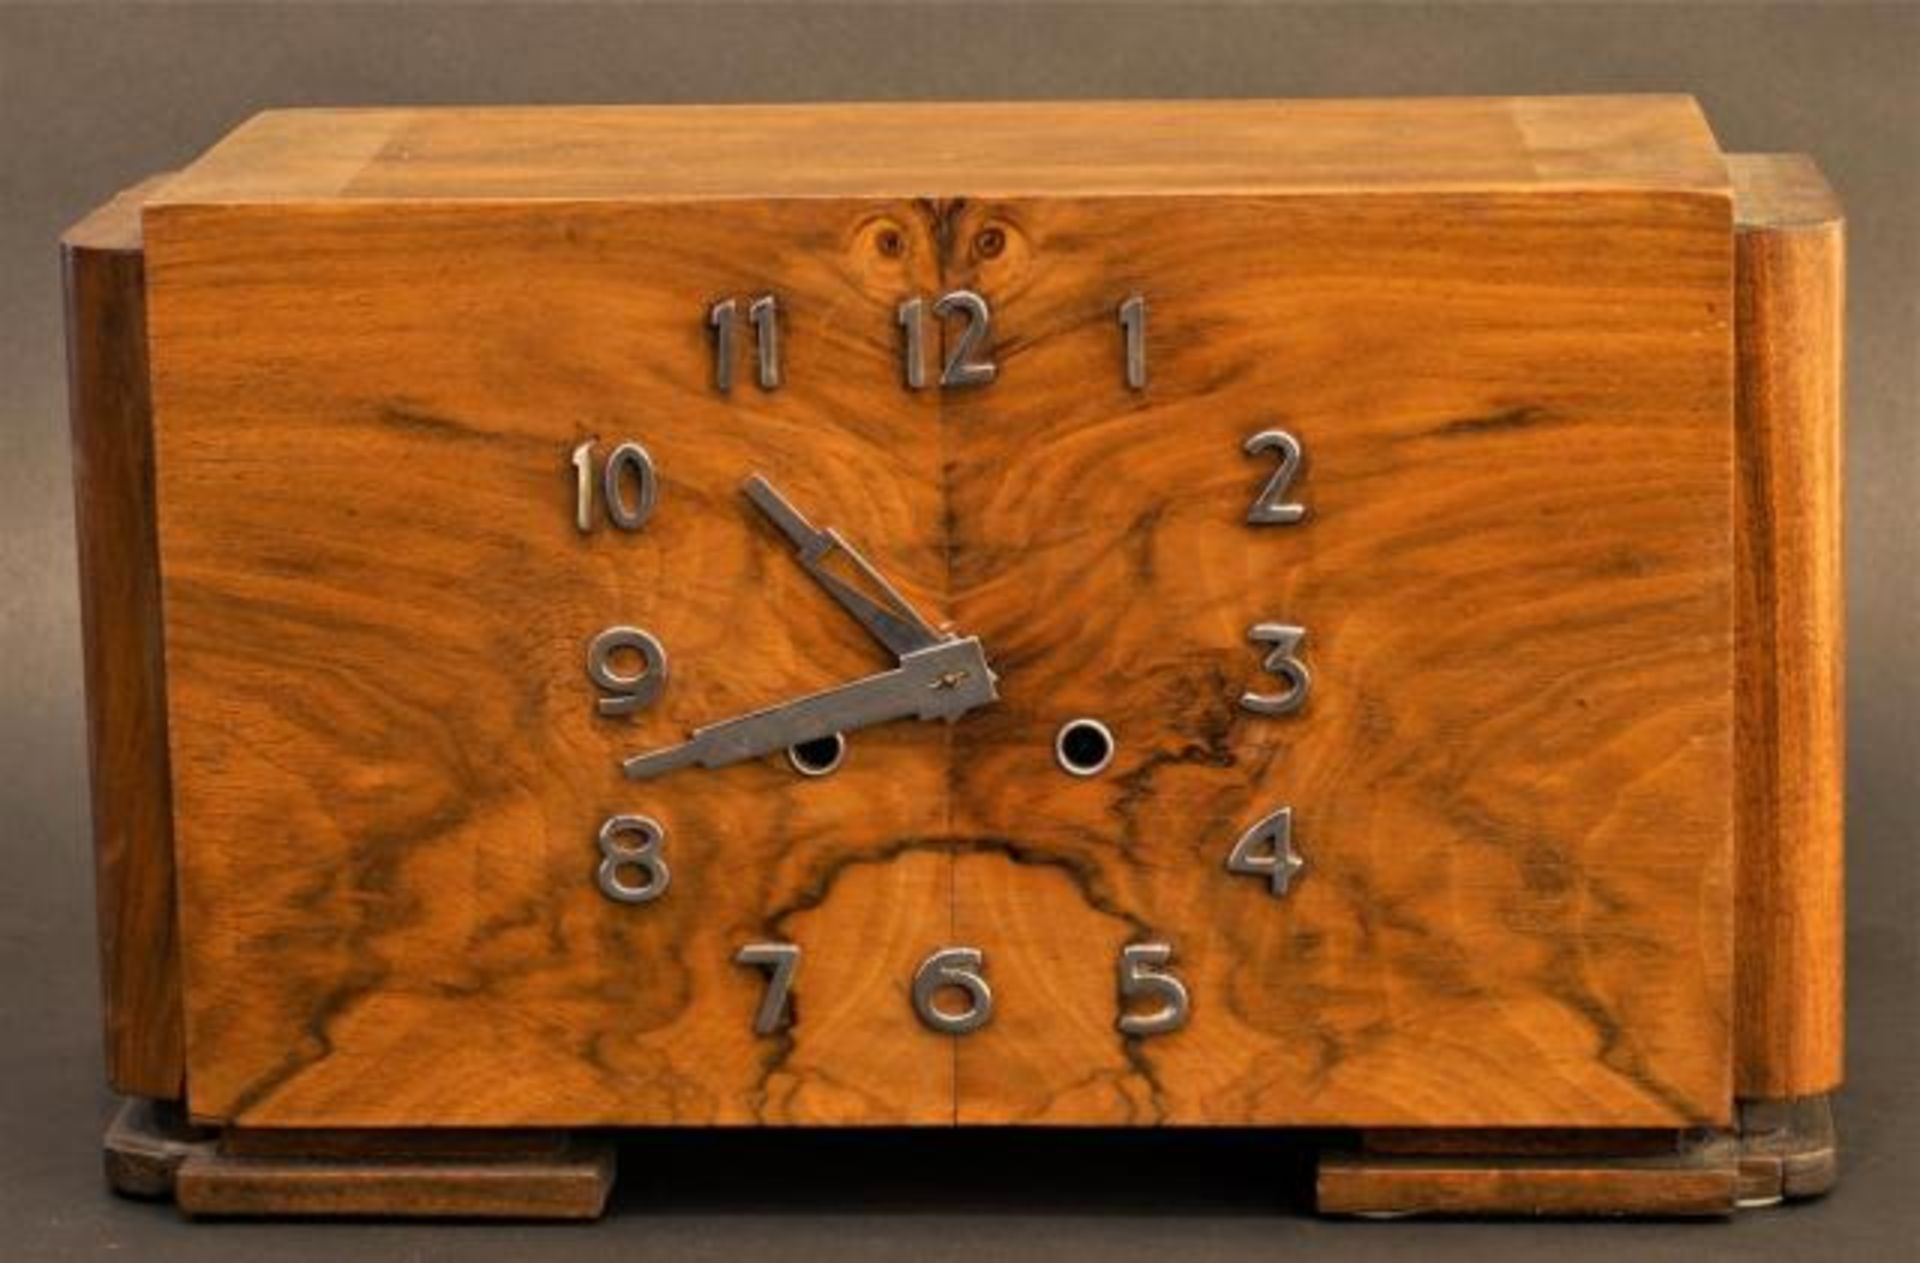 Wooden art deco table clock, dim. 22 x 38 cm.